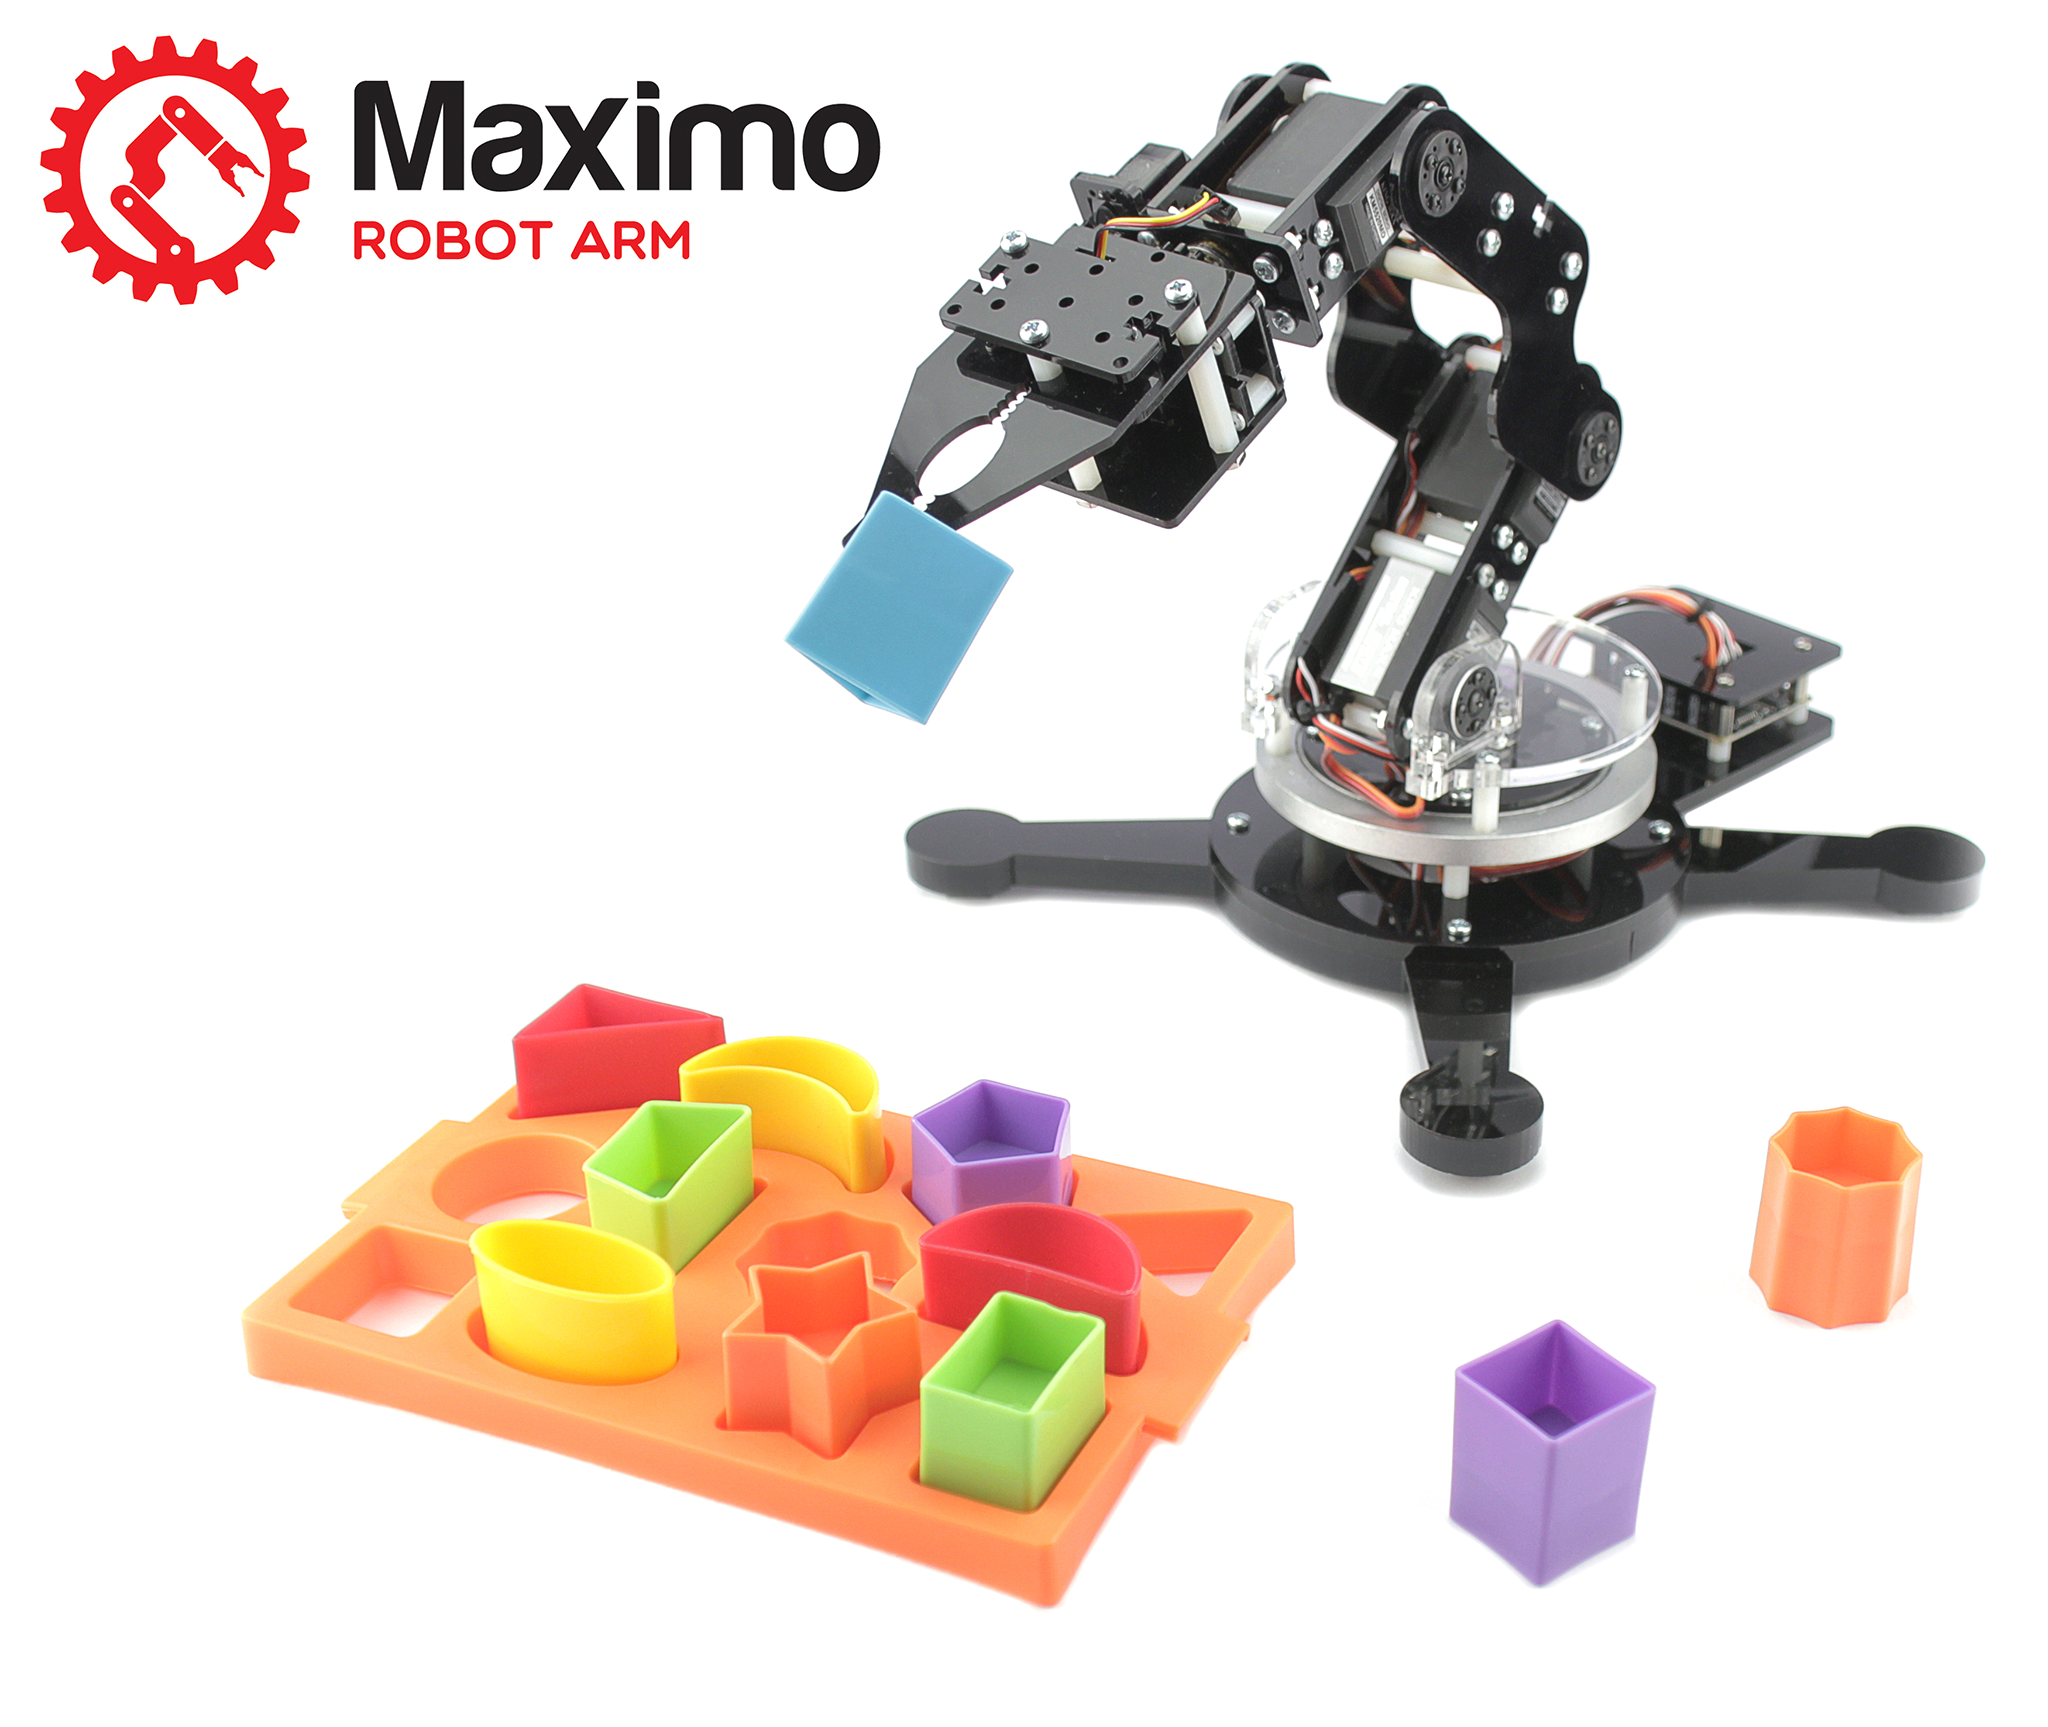 ekstremister albue Skuldre på skuldrene InnoTechnix is Launching an Arduino Maximo Robot Arm on Indiegogo